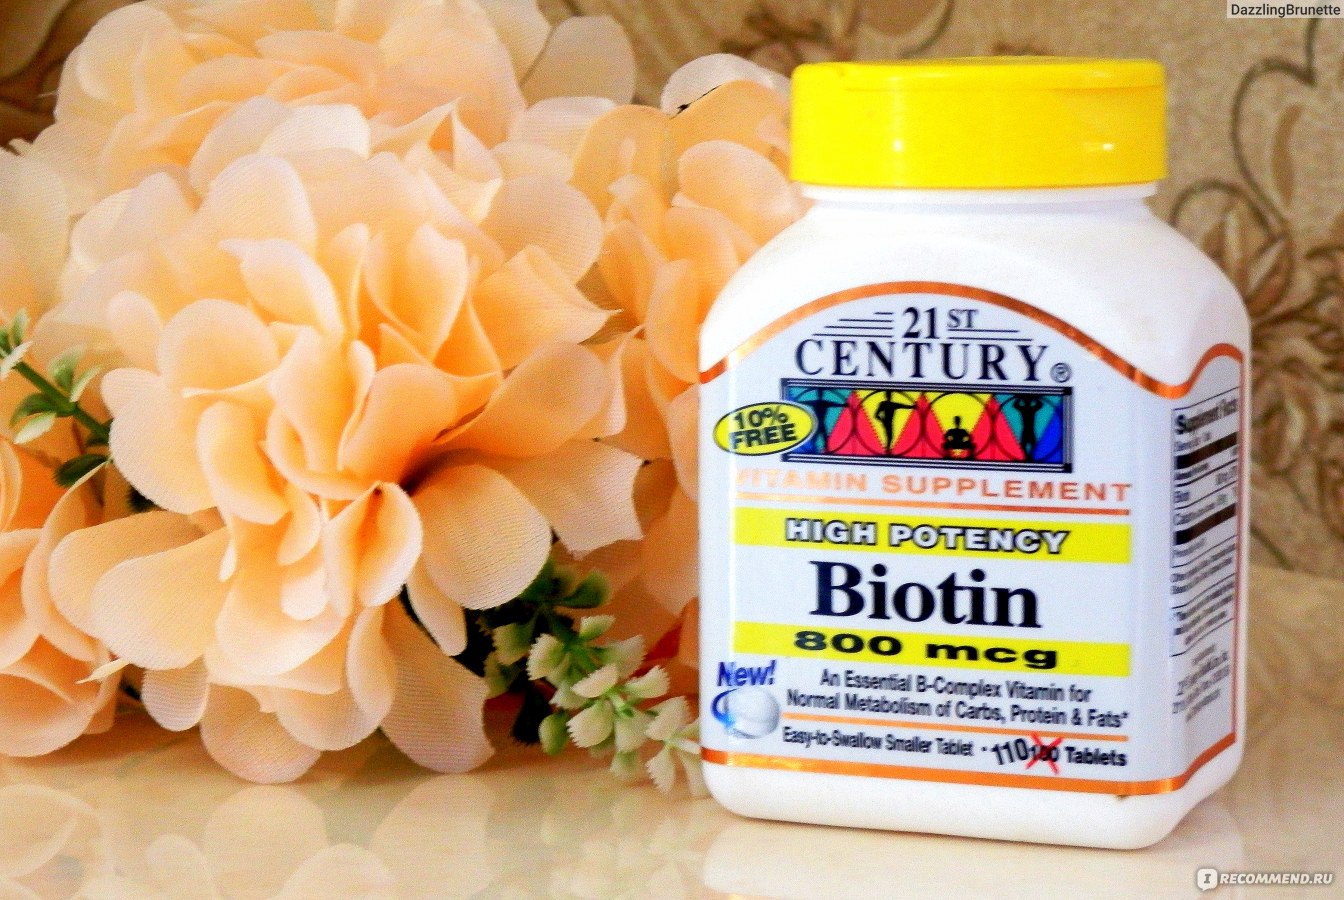 Интернет магазин витамин биотин для волос